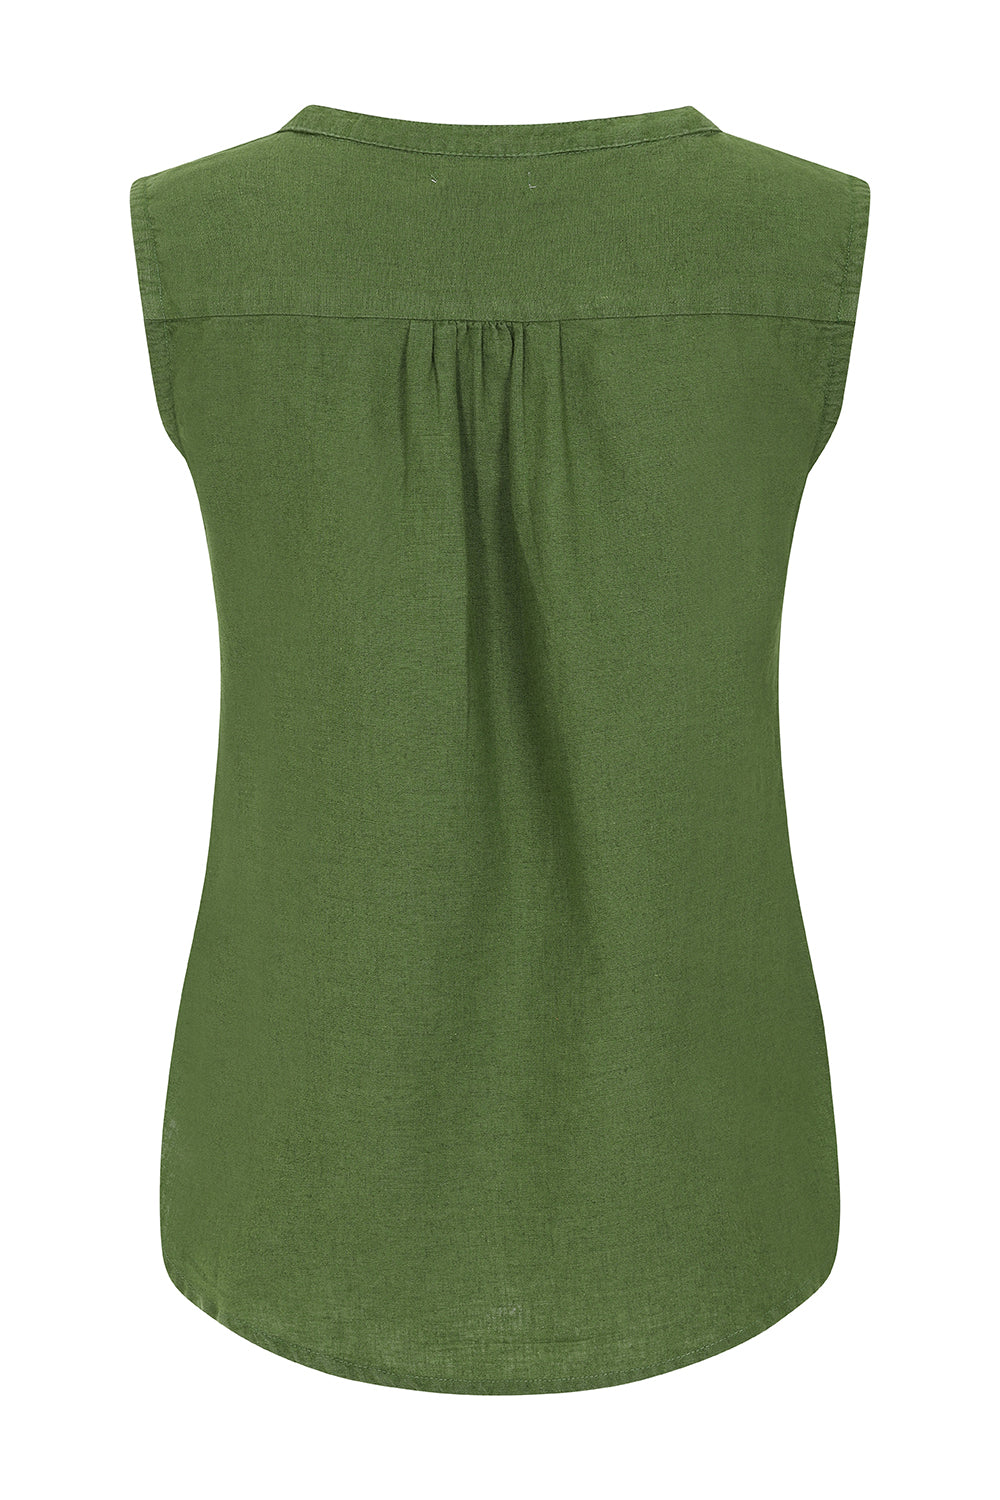 Sunrise Blouse - Green - Organic Cotton Linen Blend